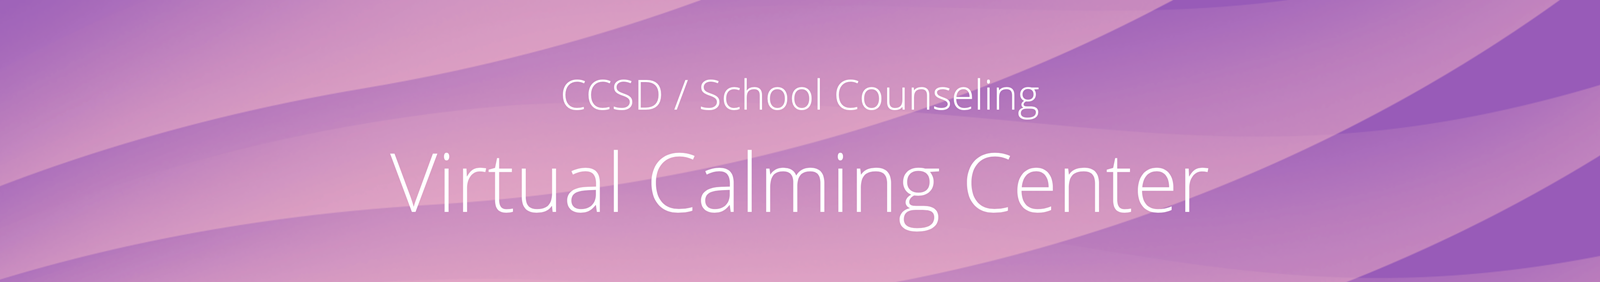 CCSD/School Counseling Virtual Calming Center